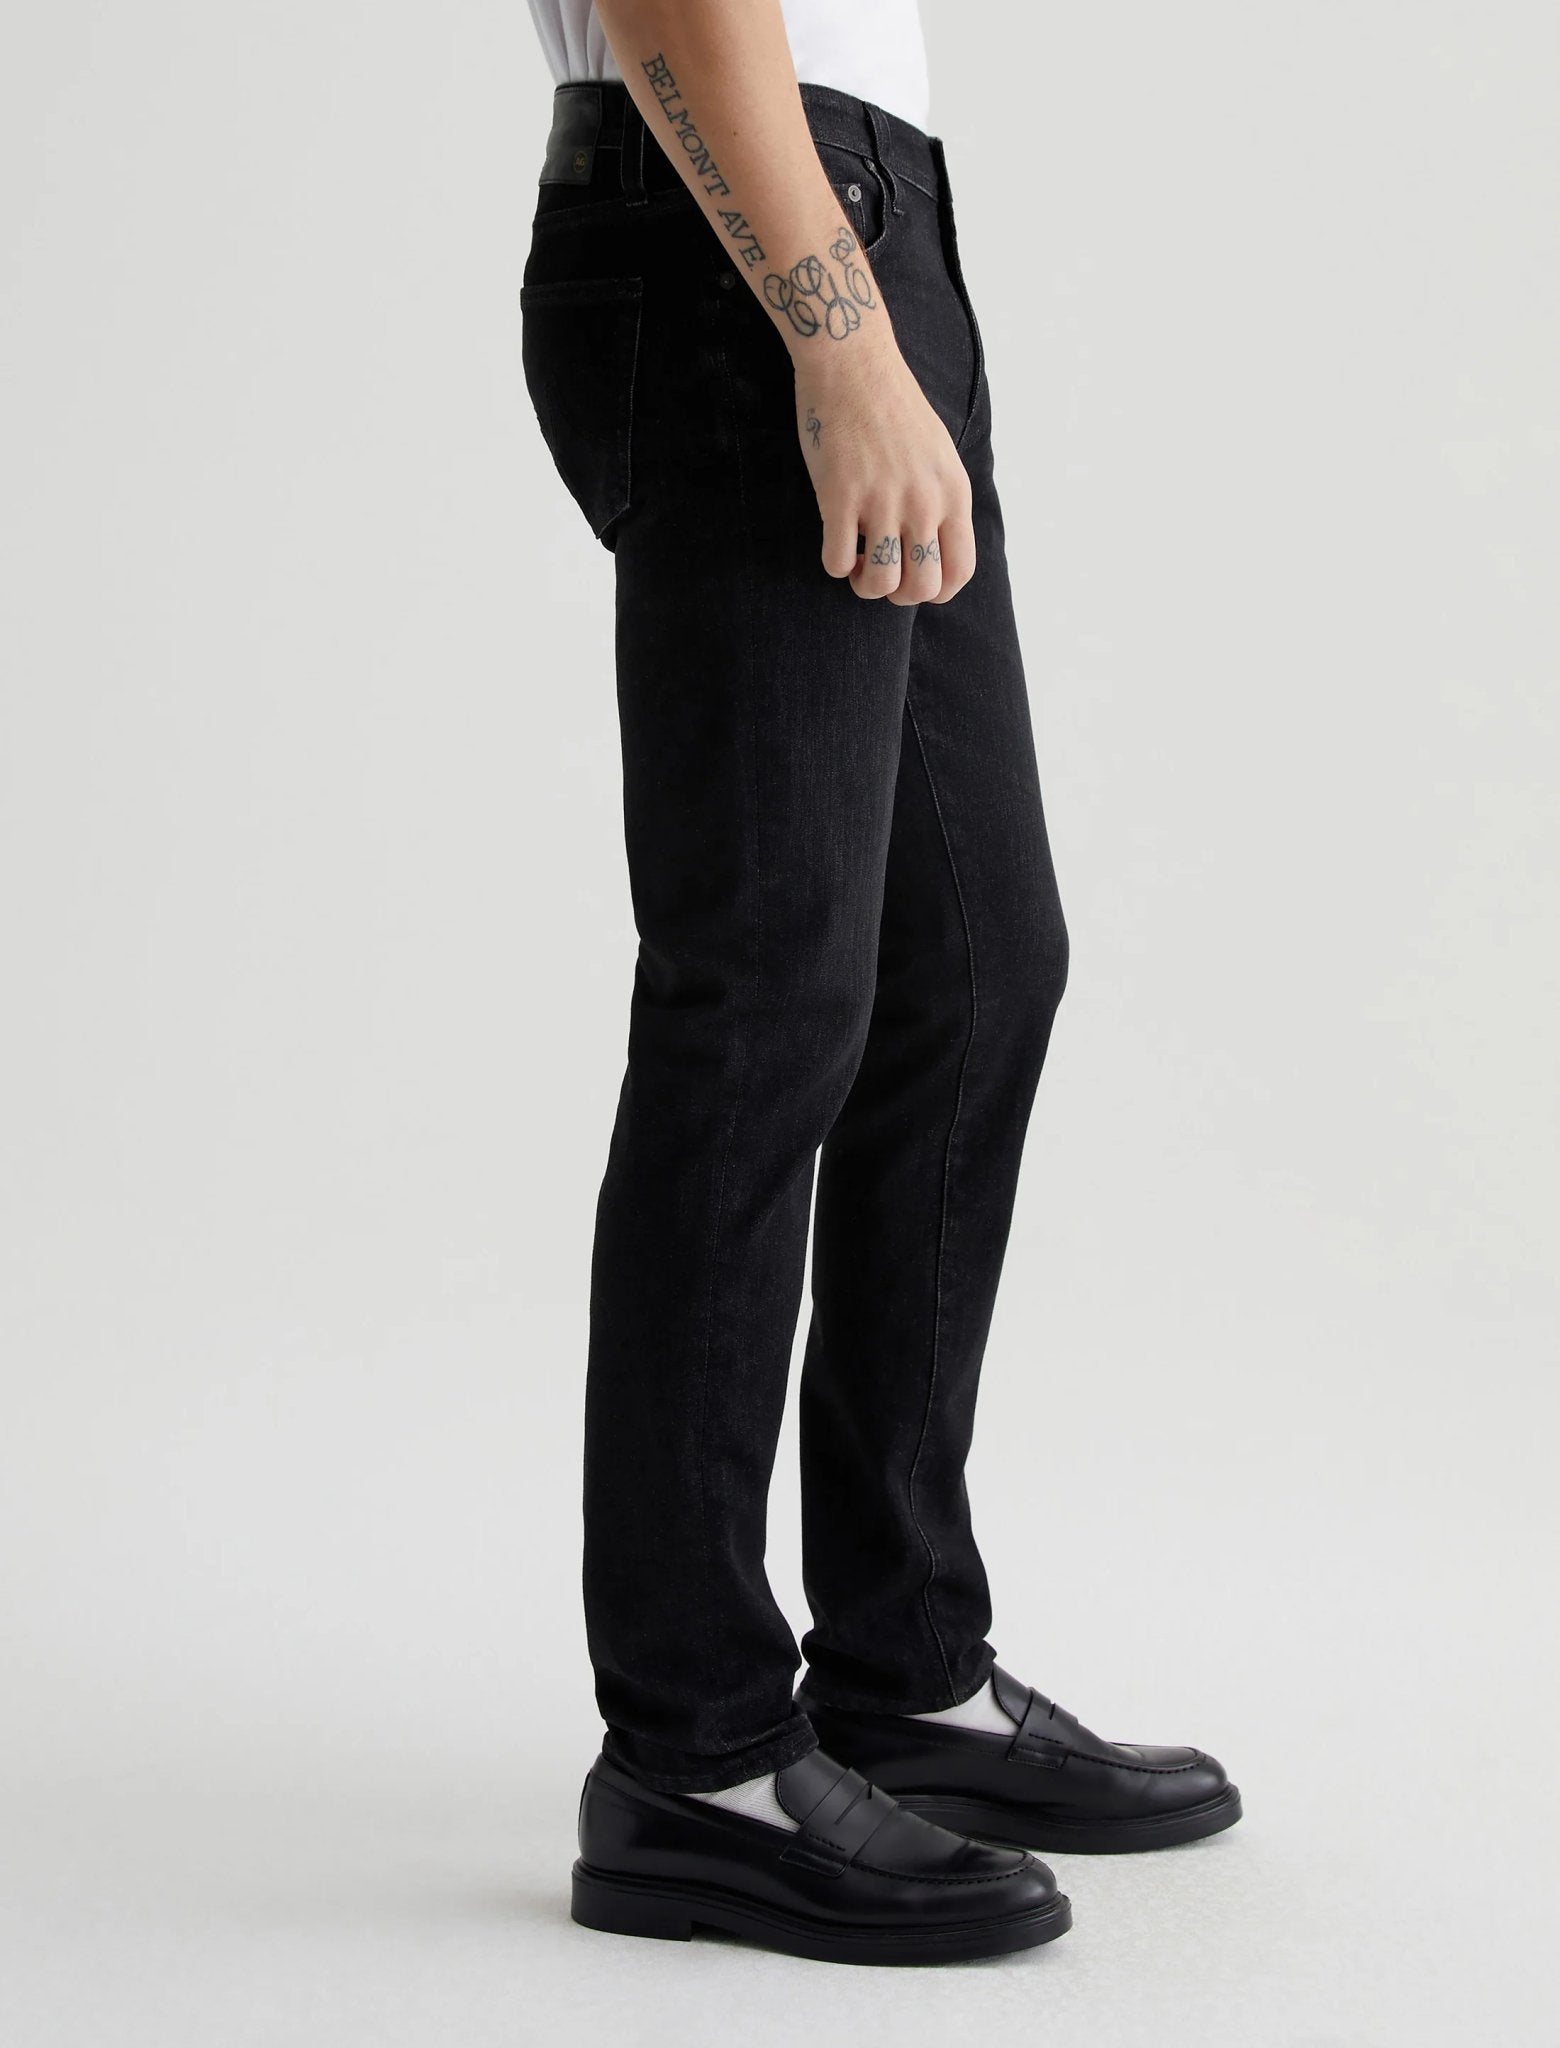 Dylan Slim Skinny Jean - AG Jeans - Danali - 1139IBK-BMAR-30